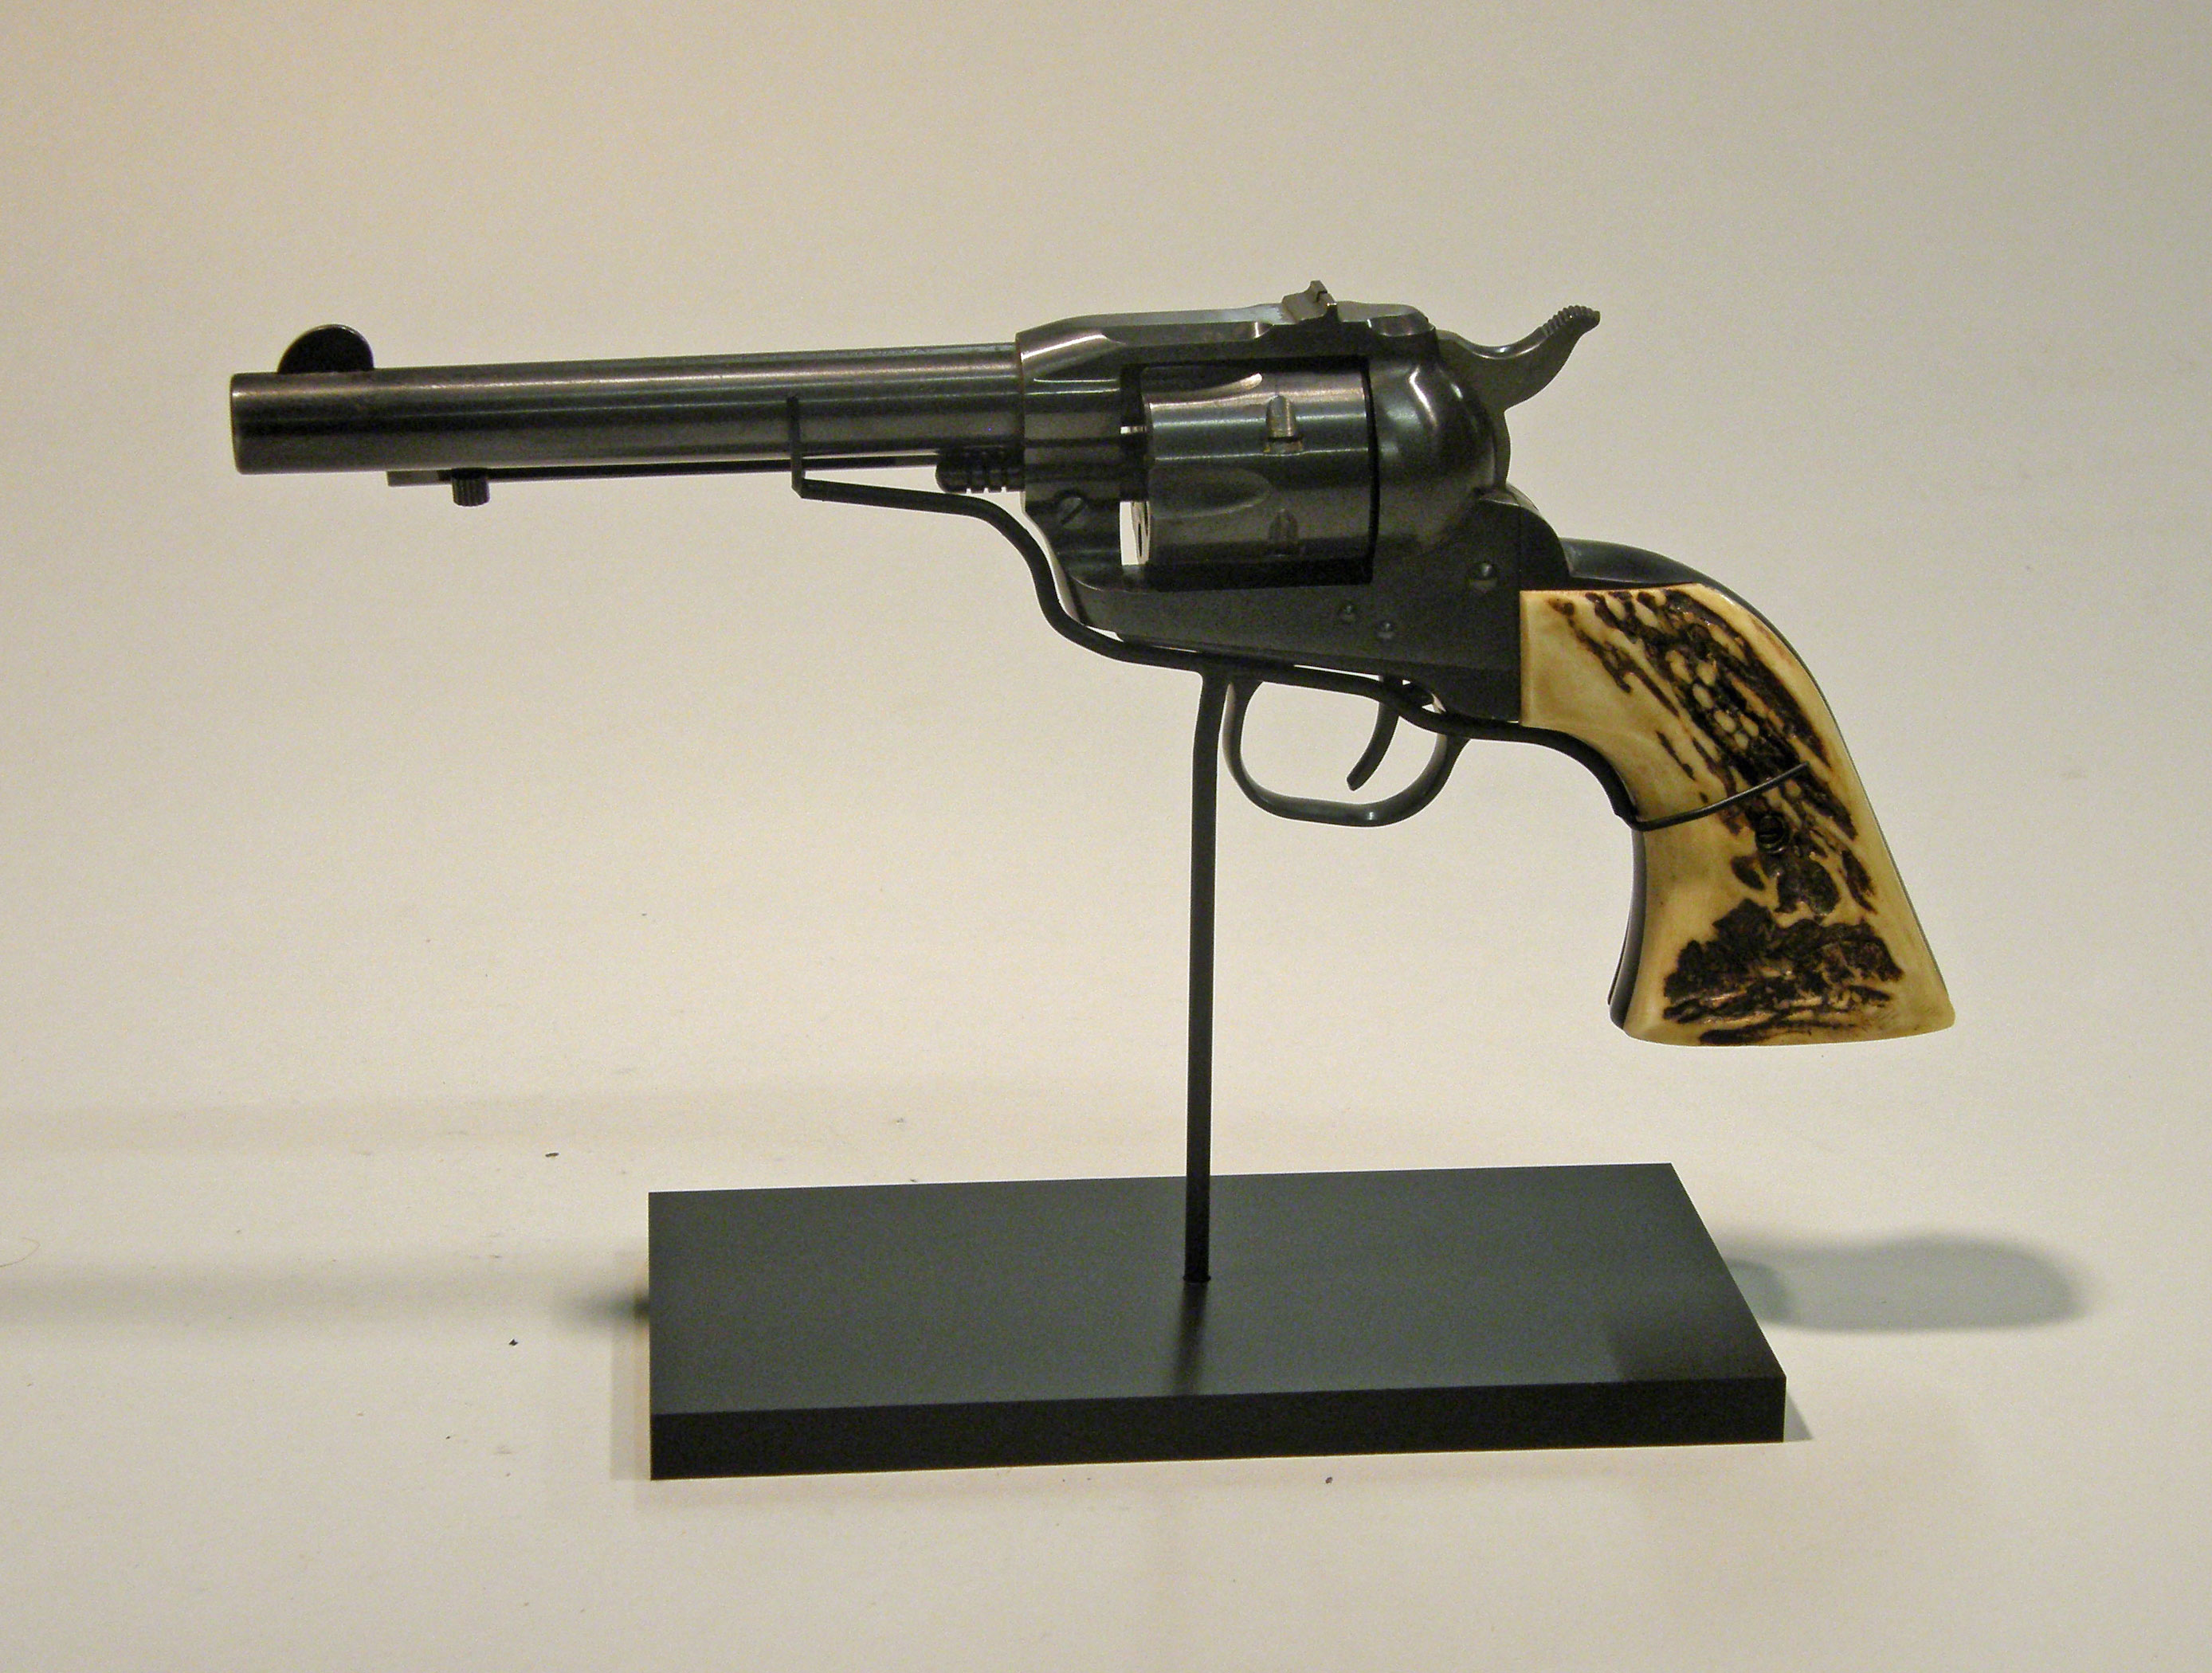 Pawn Shop Gun Show Revolver Pistol Acrylic Display Presentation Stand 